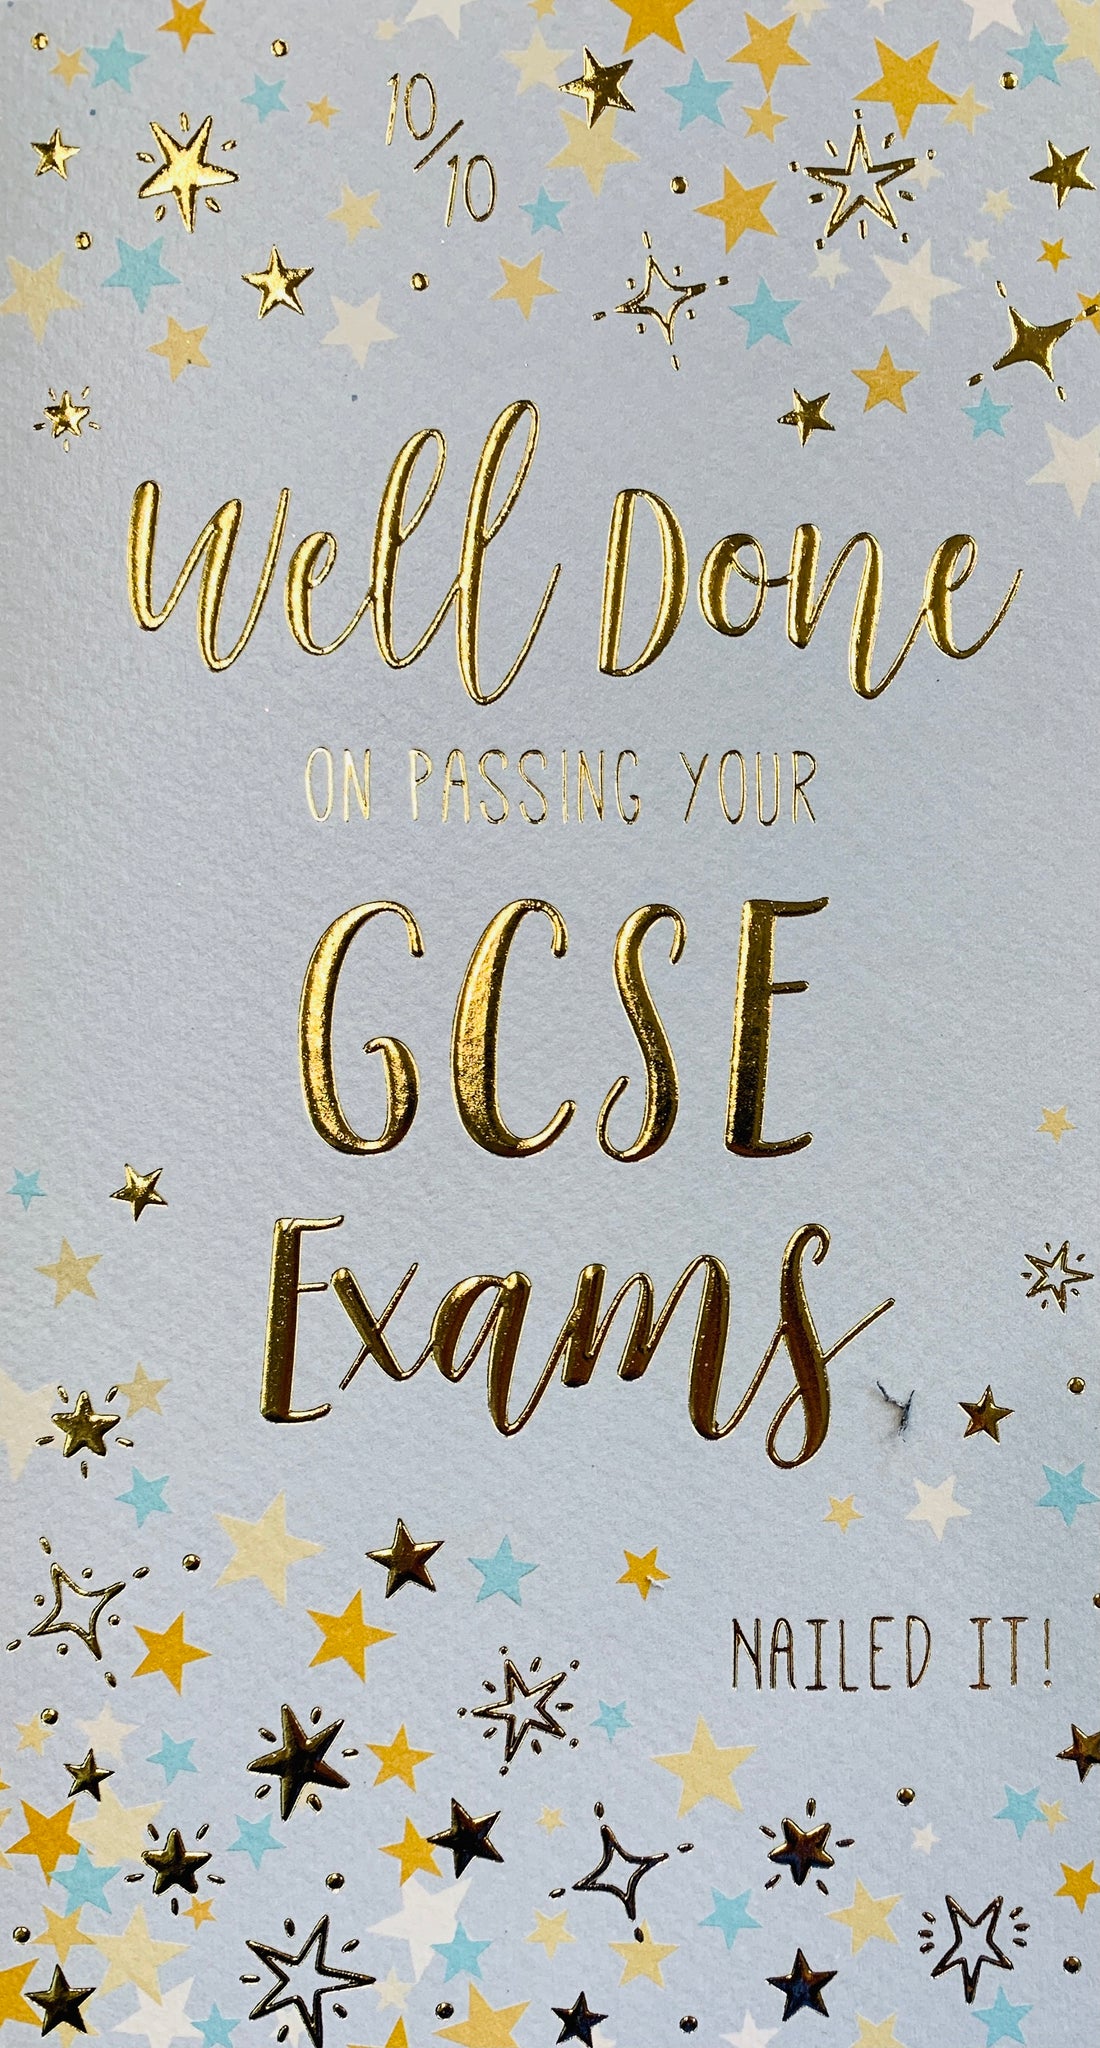 GCSE exam congratulations card